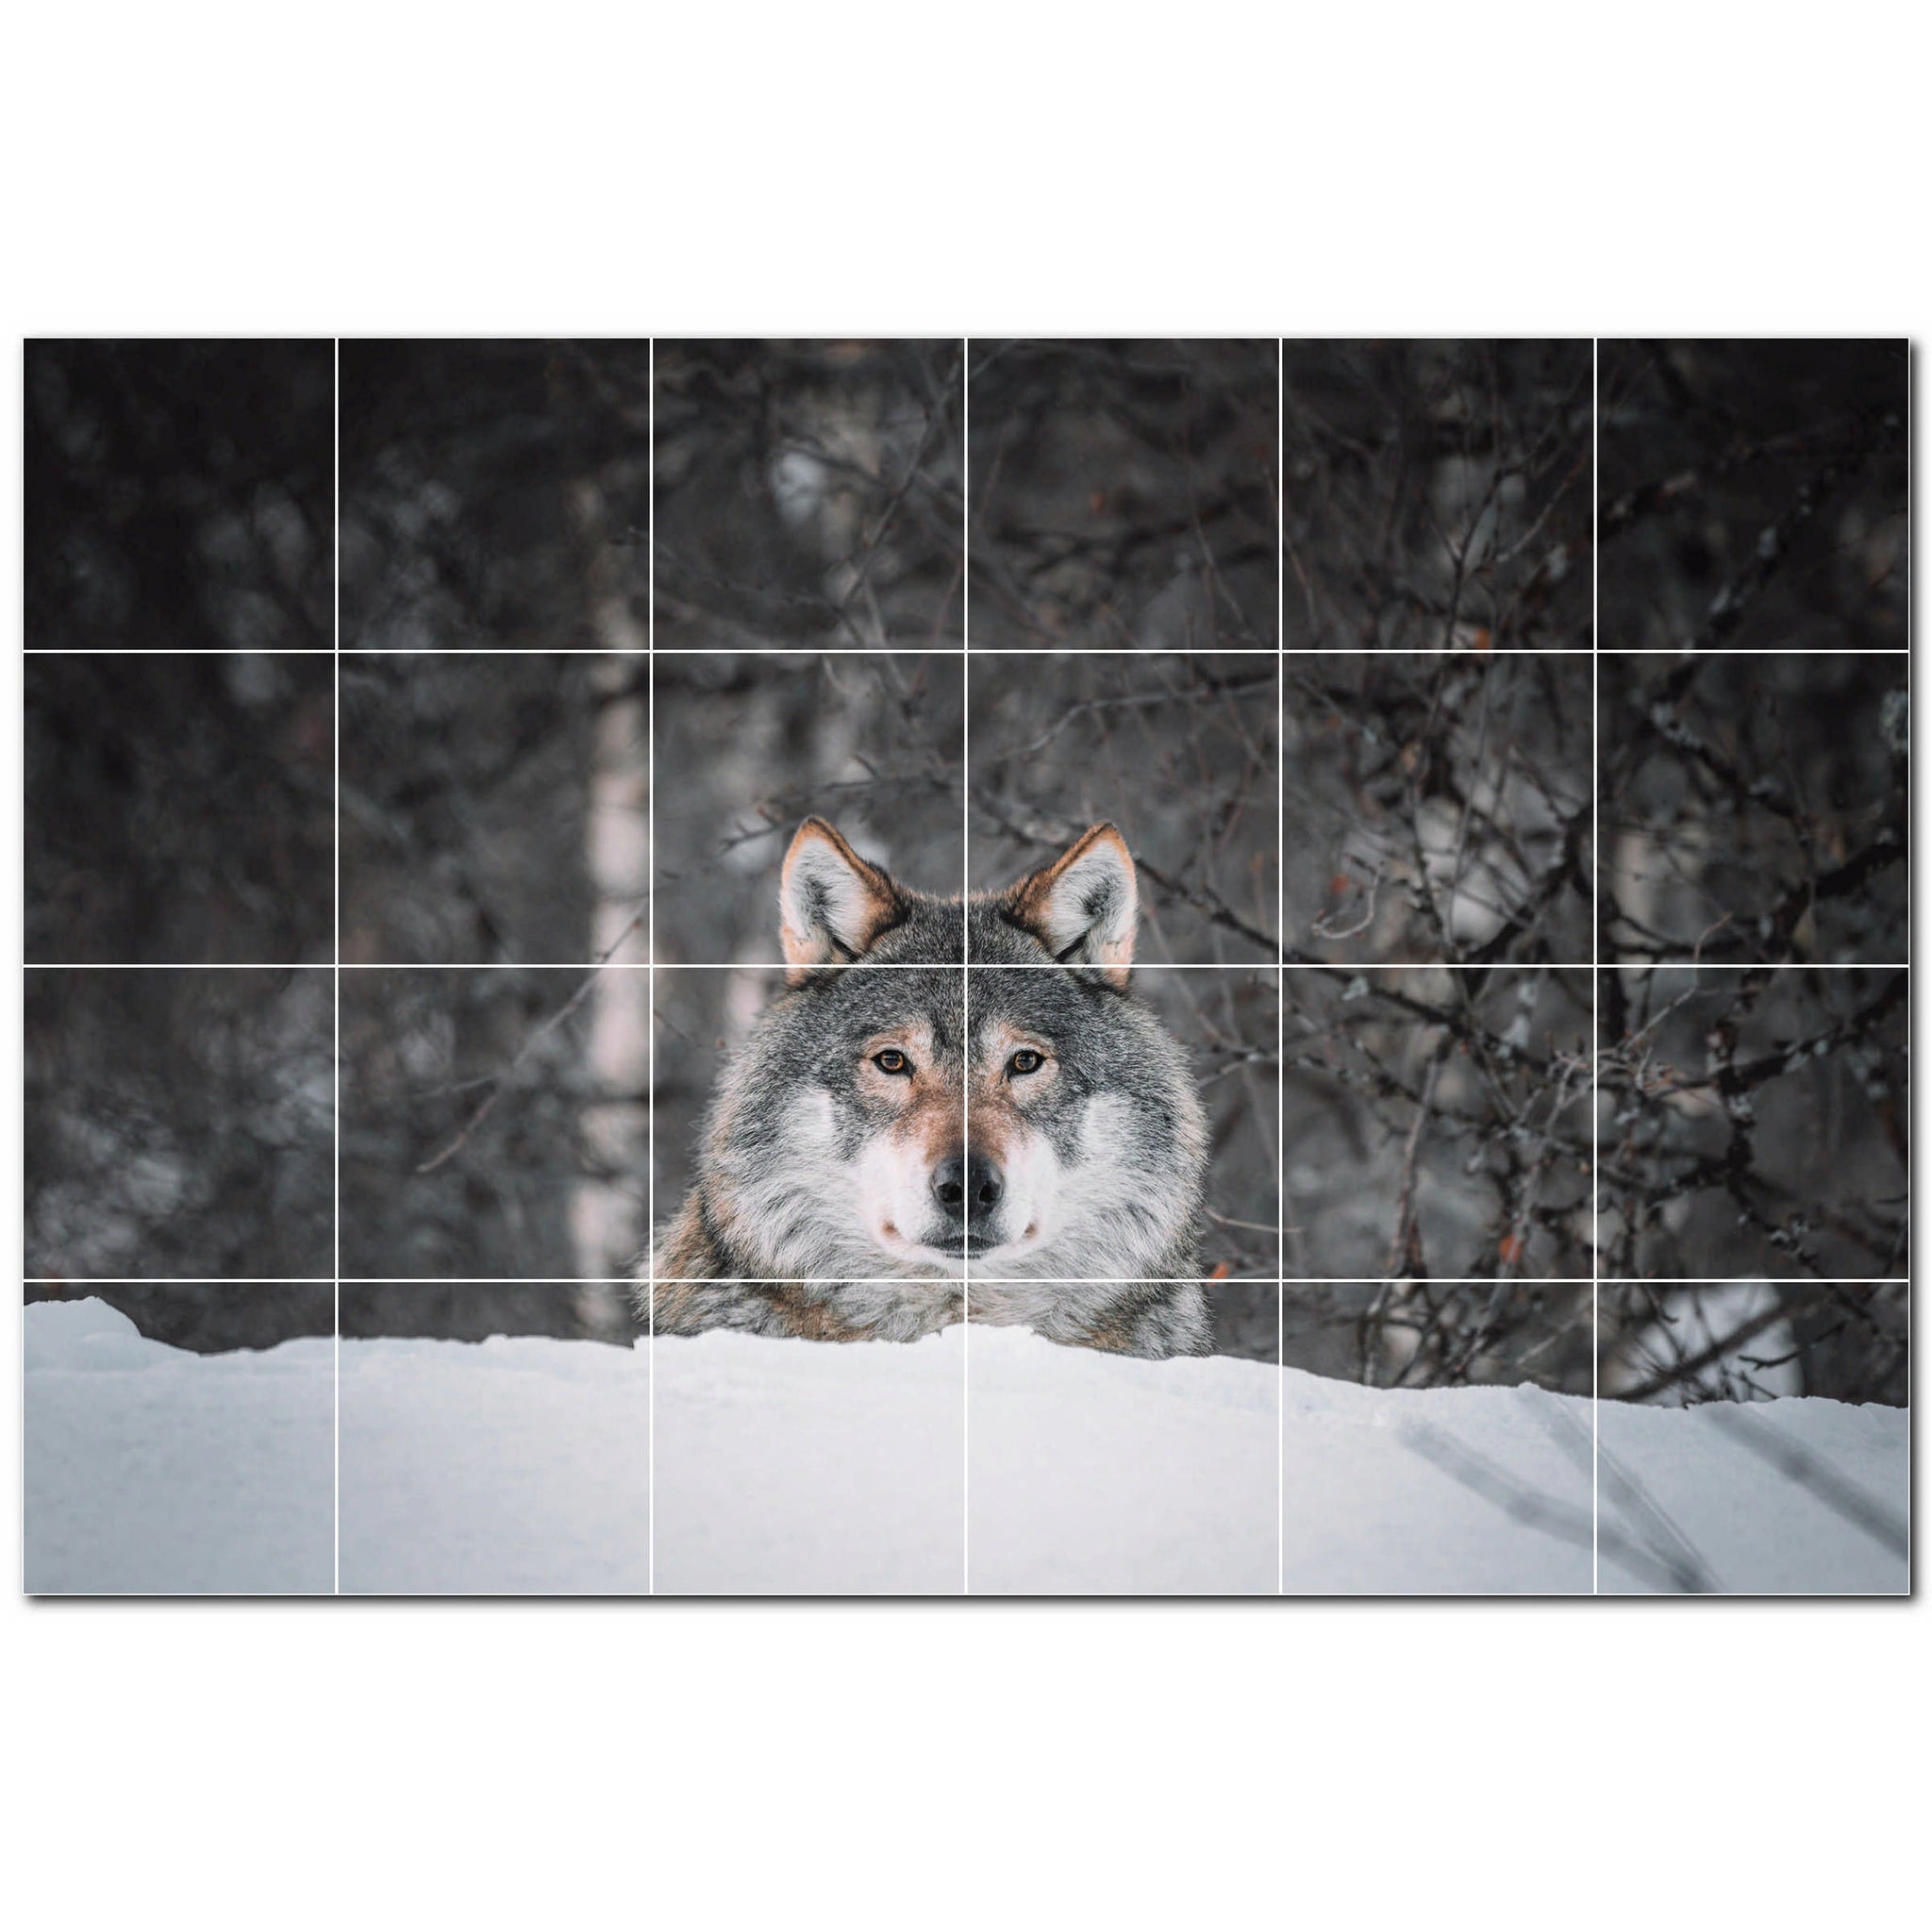 Wolf Ceramic Tile Wall Mural Kitchen Backsplash Bathroom Shower P501232